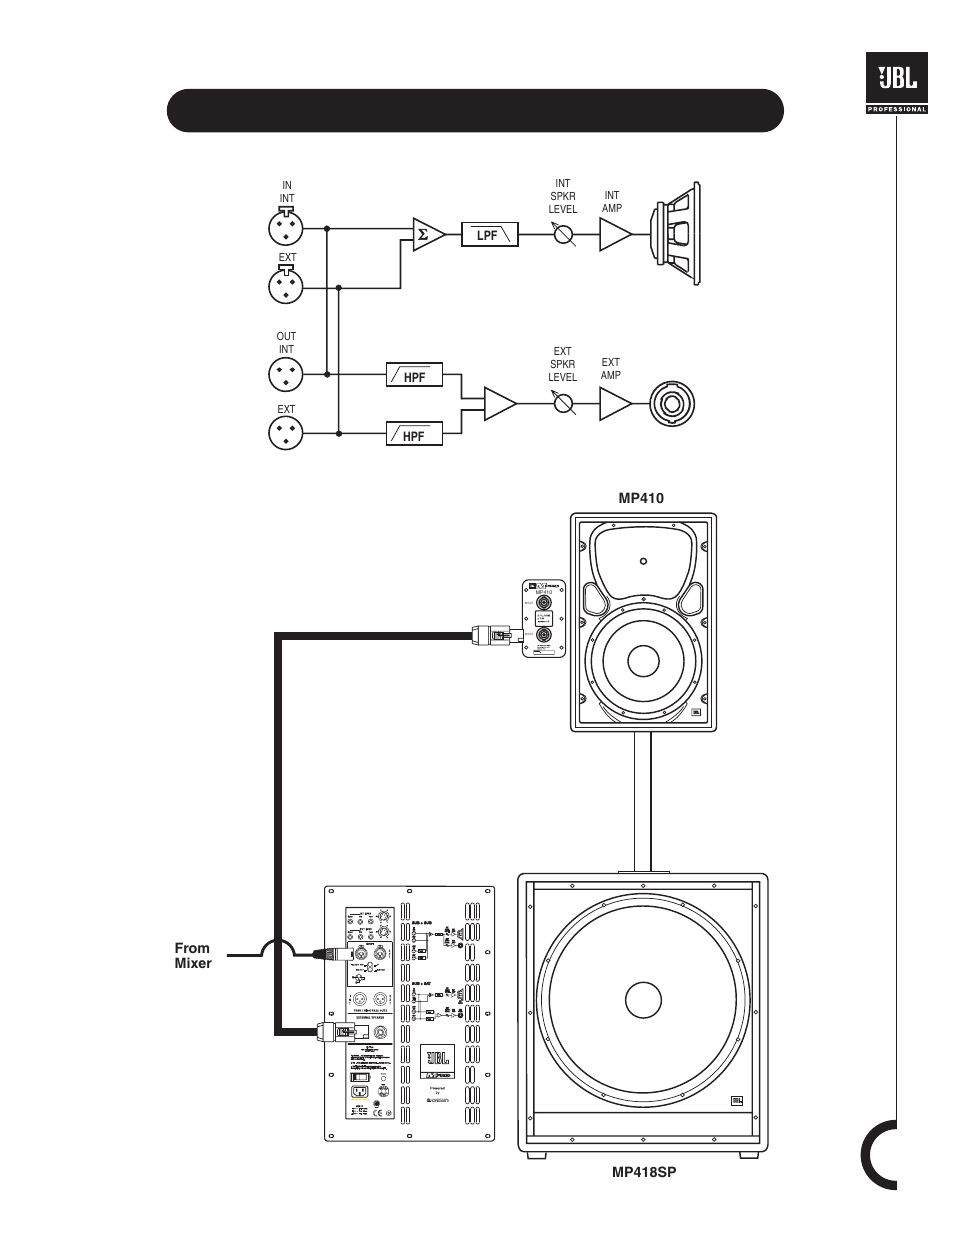 Sub + sat mode | JBL MP418SP User Manual | Page 17 / 20